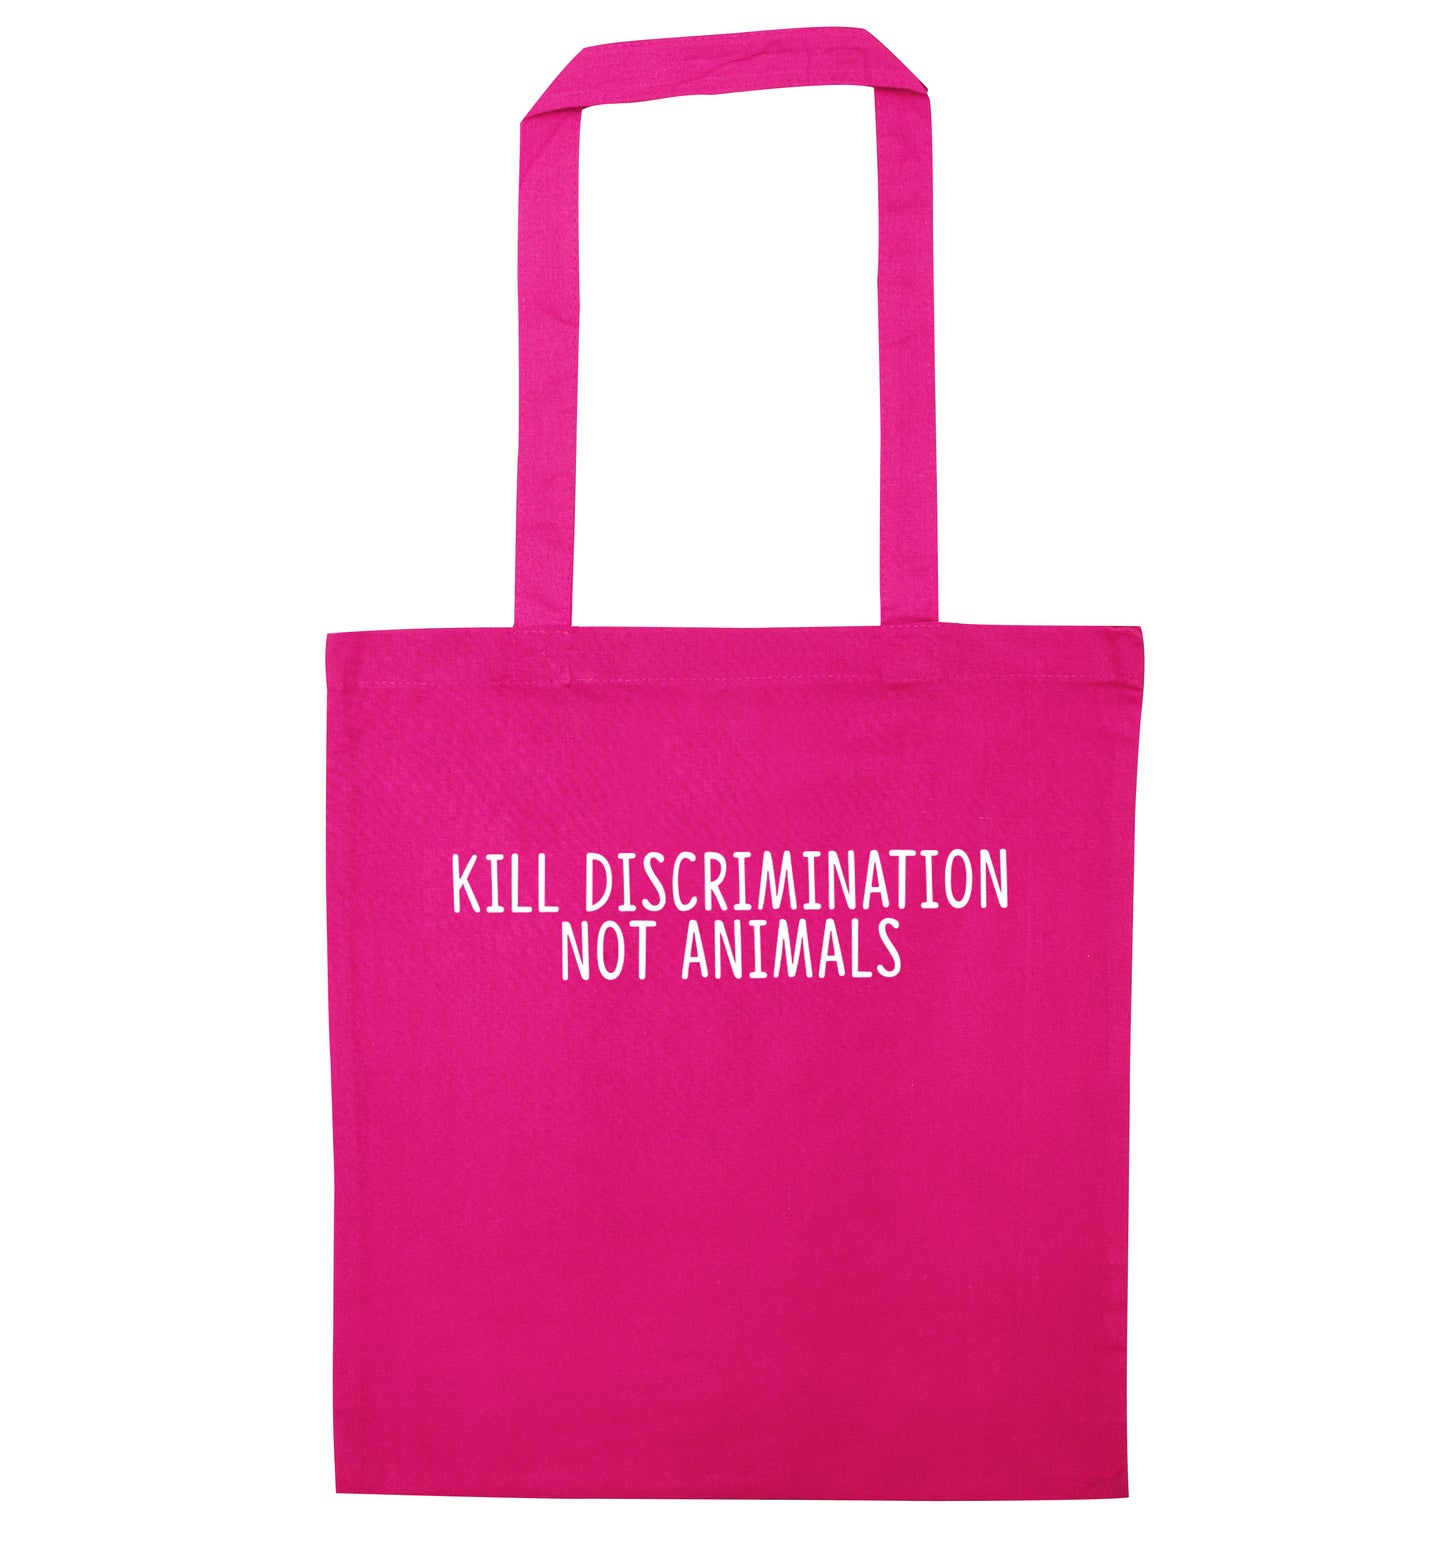 Kill Discrimination Not Animals pink tote bag